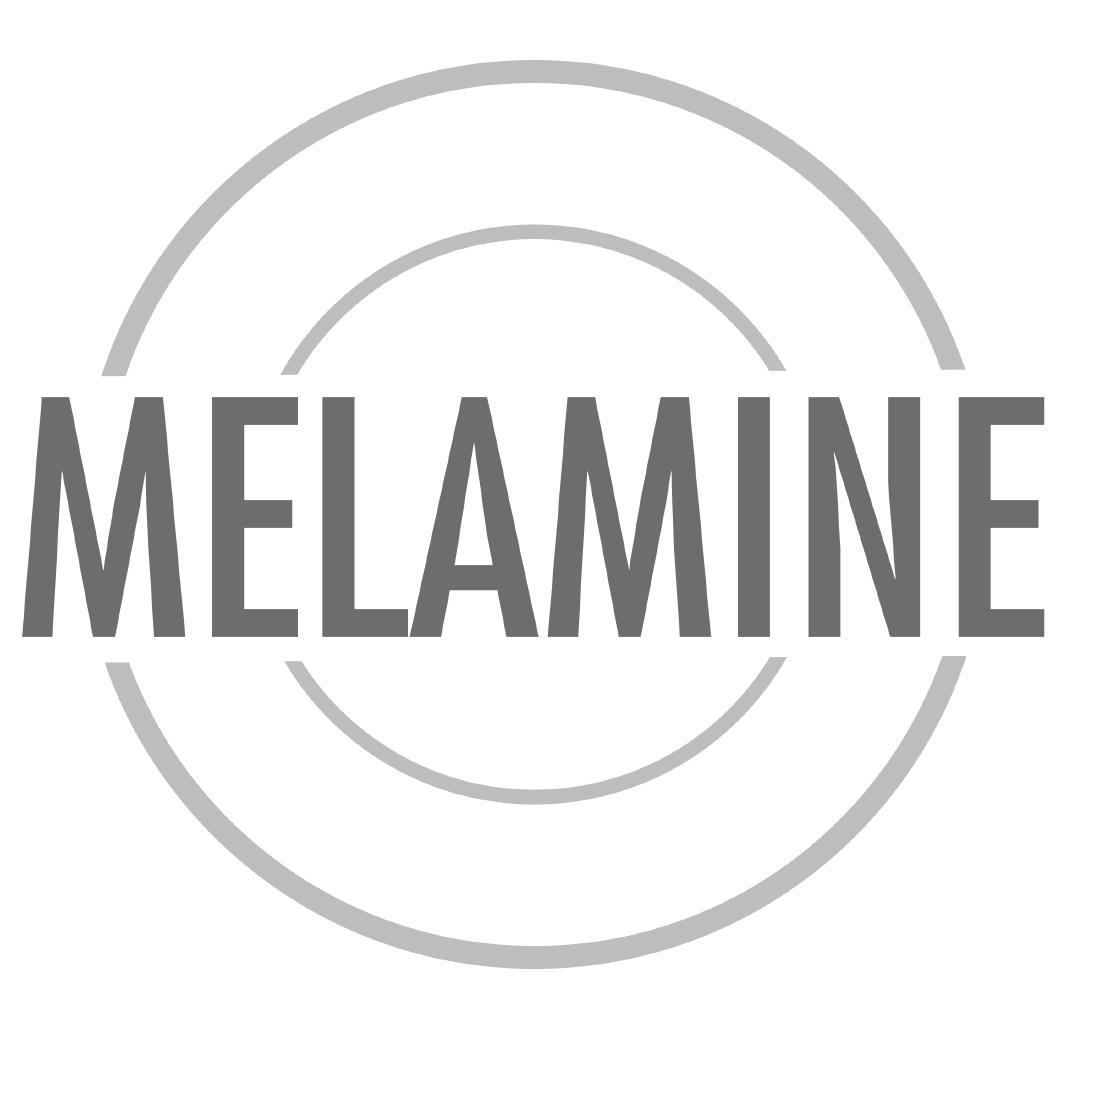 Olympia Kristallon Melamine Fluted Ramekins White 70mm (Pack of 12) - T700  - 2